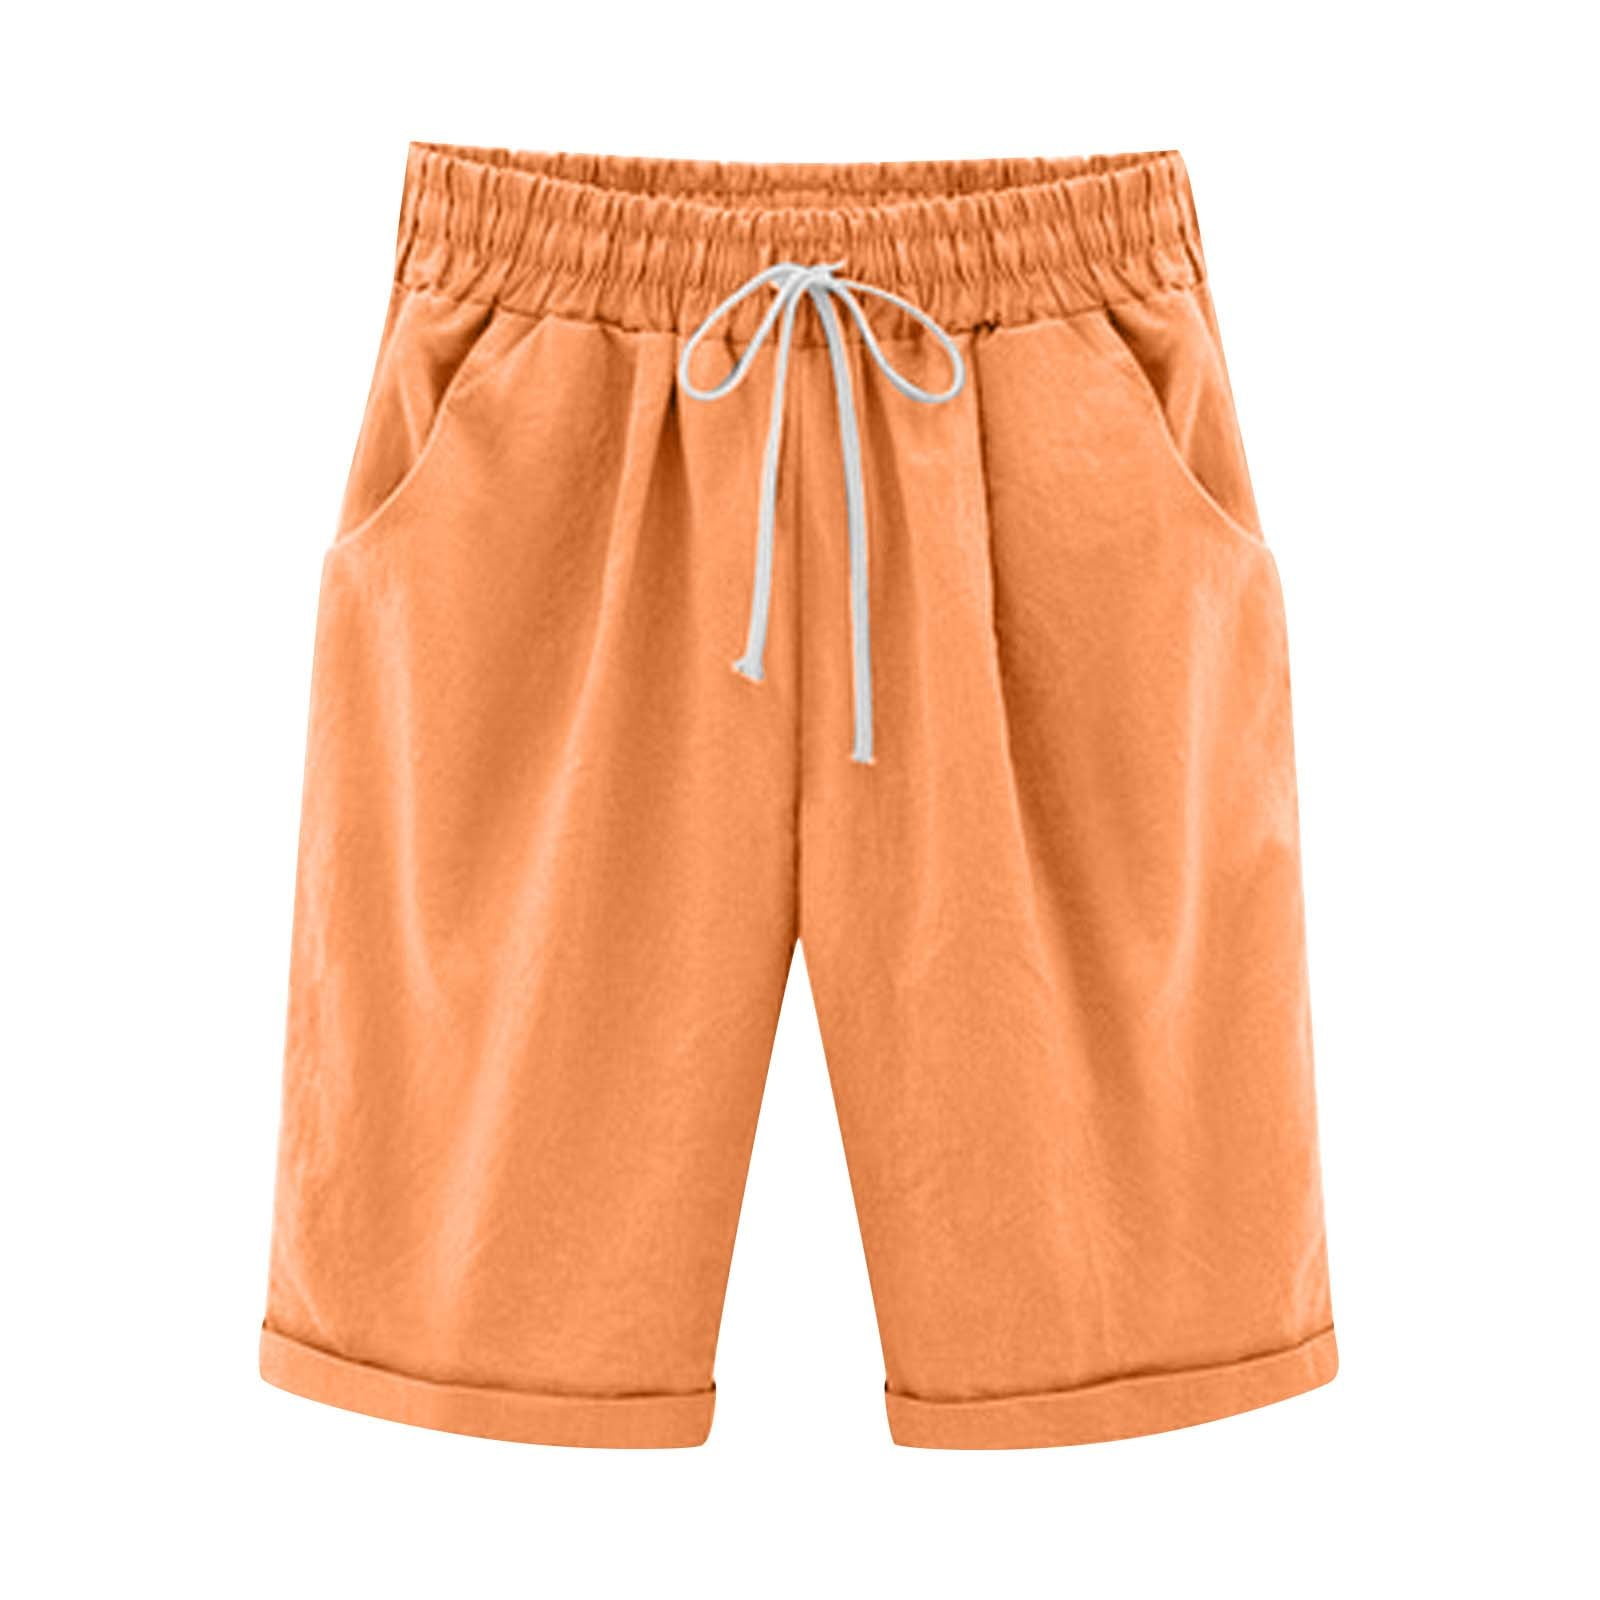 SWEET POISON Womens Shorts Summer Casual Drawstring Elastic Waist  Cotton/Denim Comfy Short with Pockets